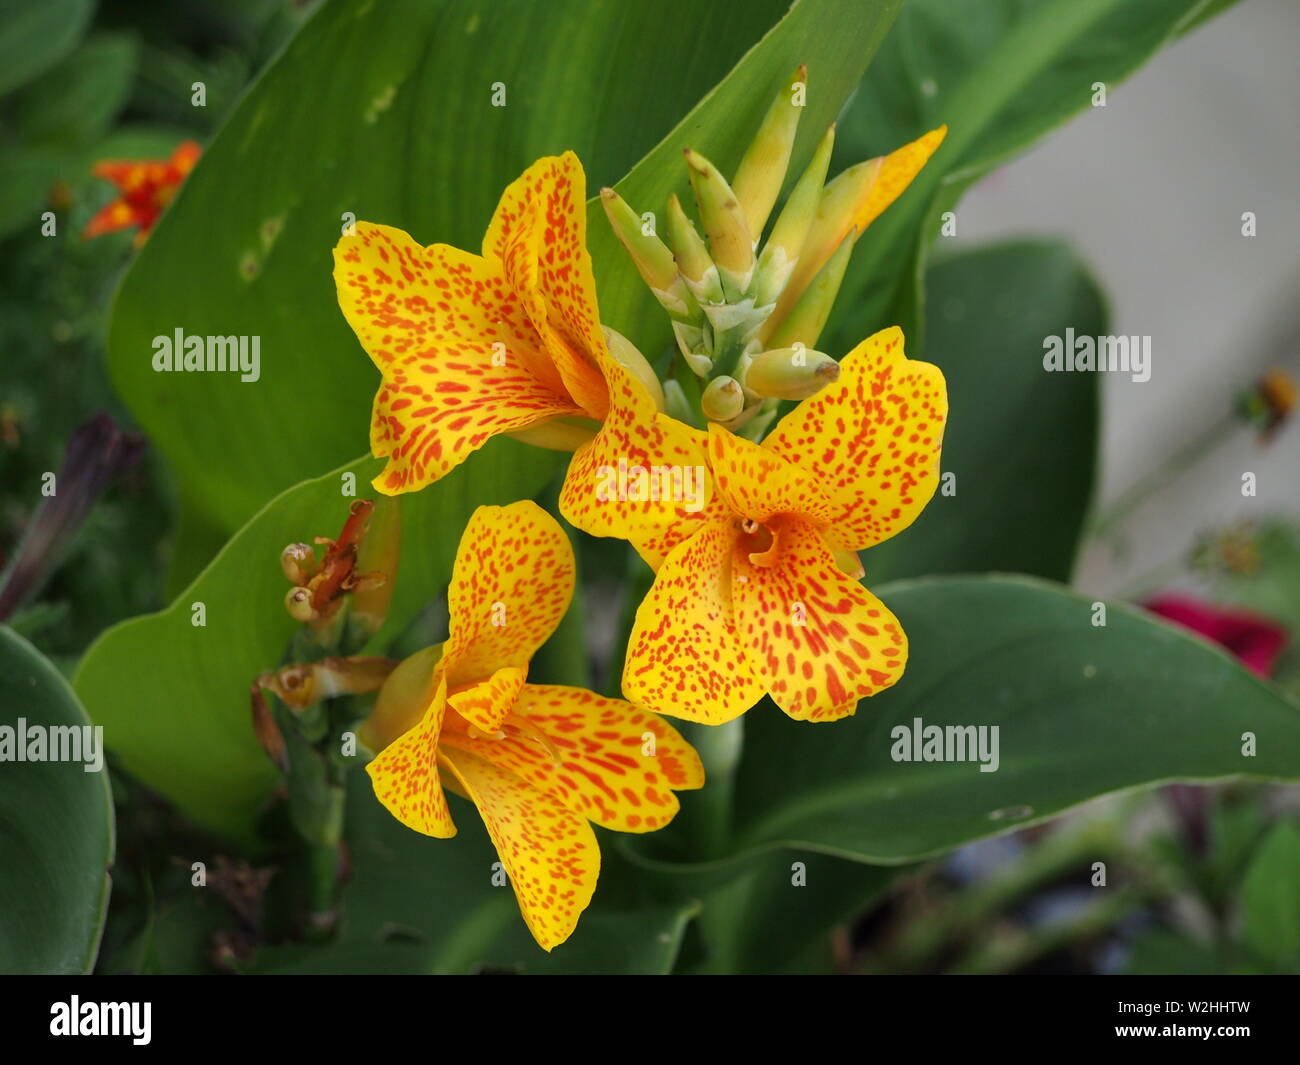 Three Calla lily flowers, yellow with orange spots Stock Photo